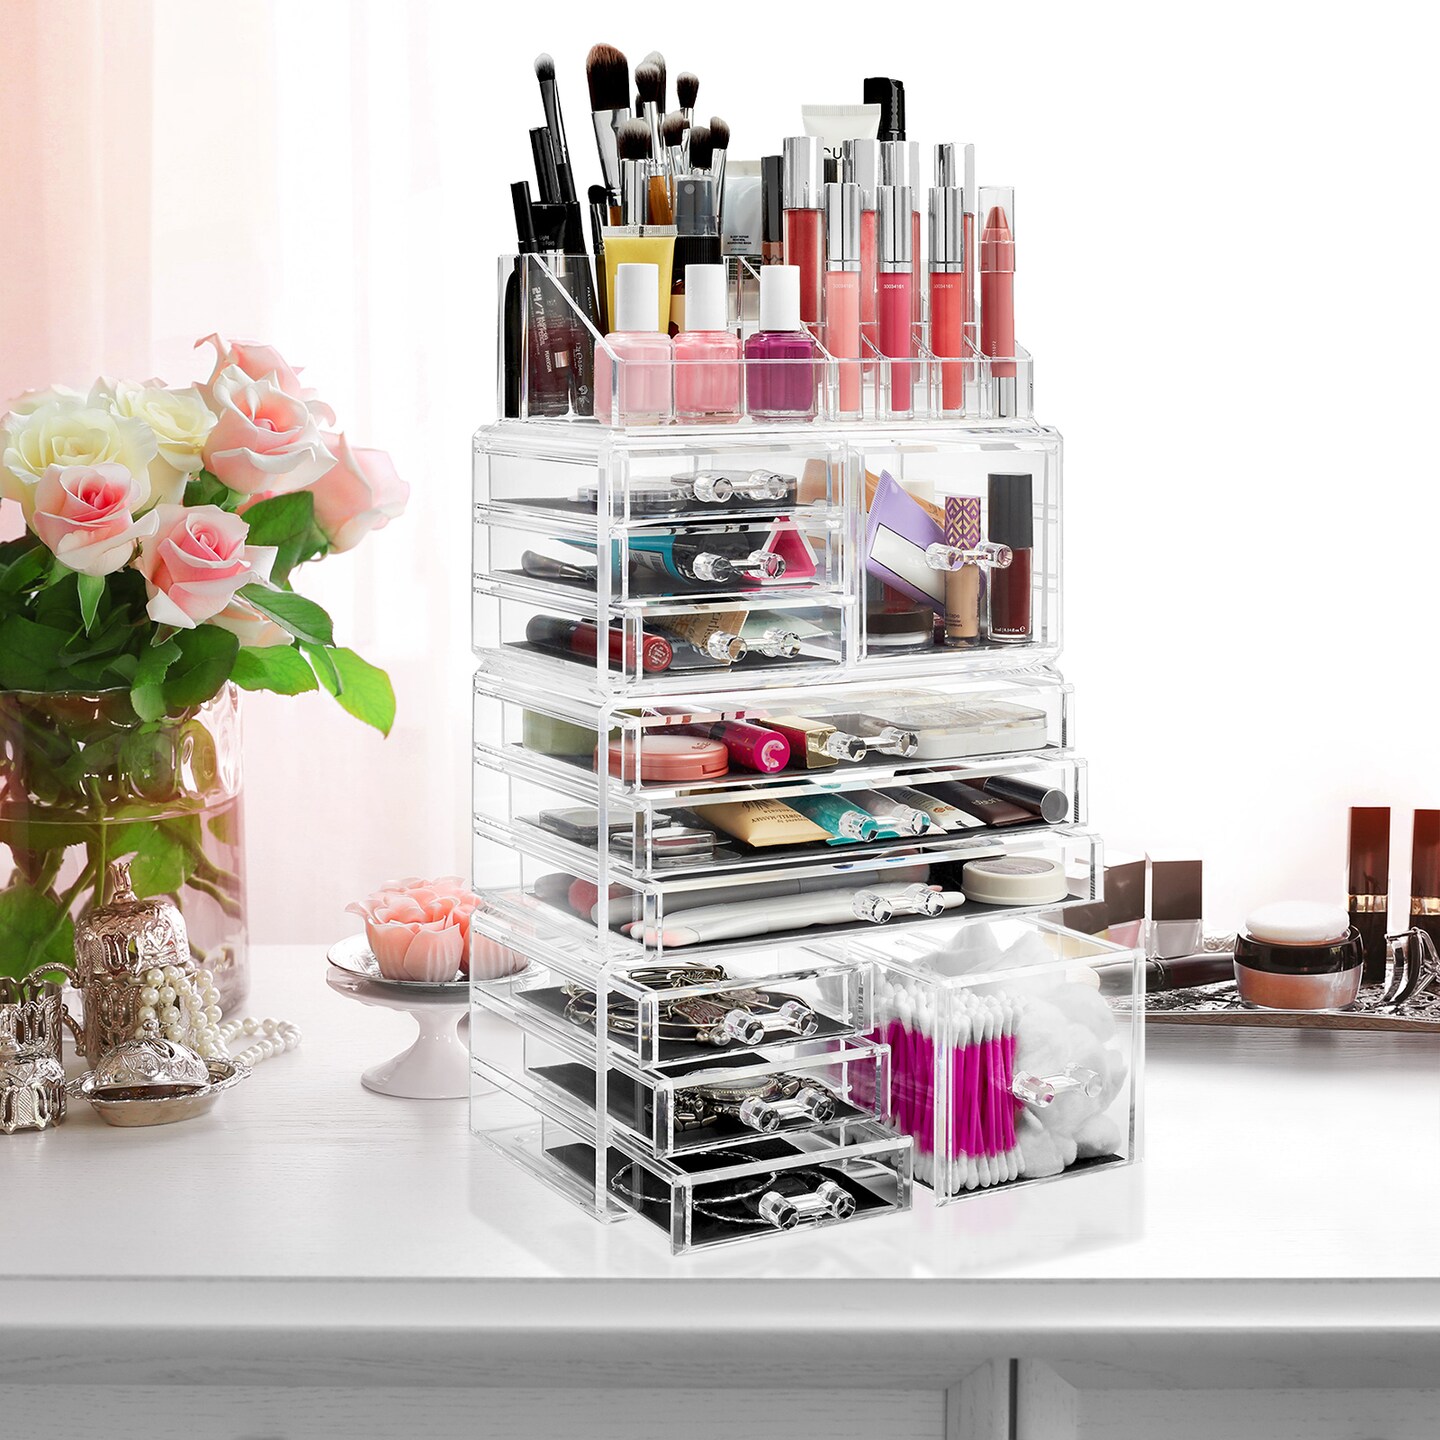 Casafield Acrylic Cosmetic Makeup Organizer &#x26; Jewelry Storage Display Case - Large 16 Slot, 2 Box &#x26; 9 Drawer Set - Clear